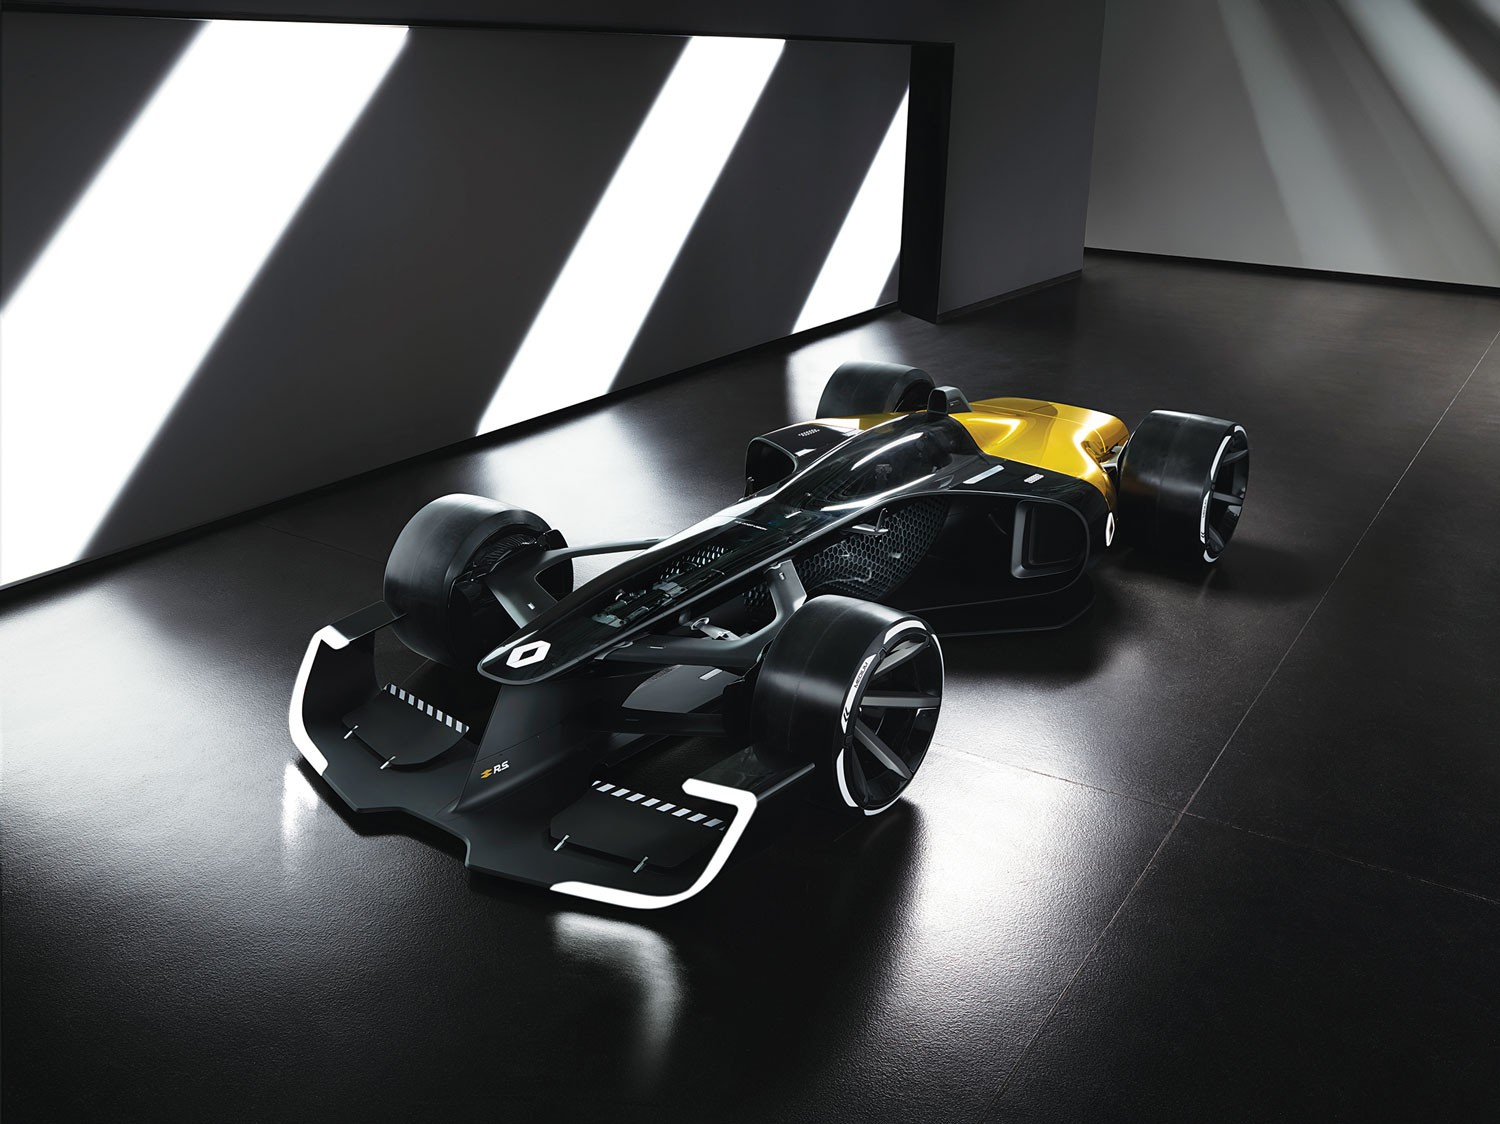 Bell & Ross X Renault F1